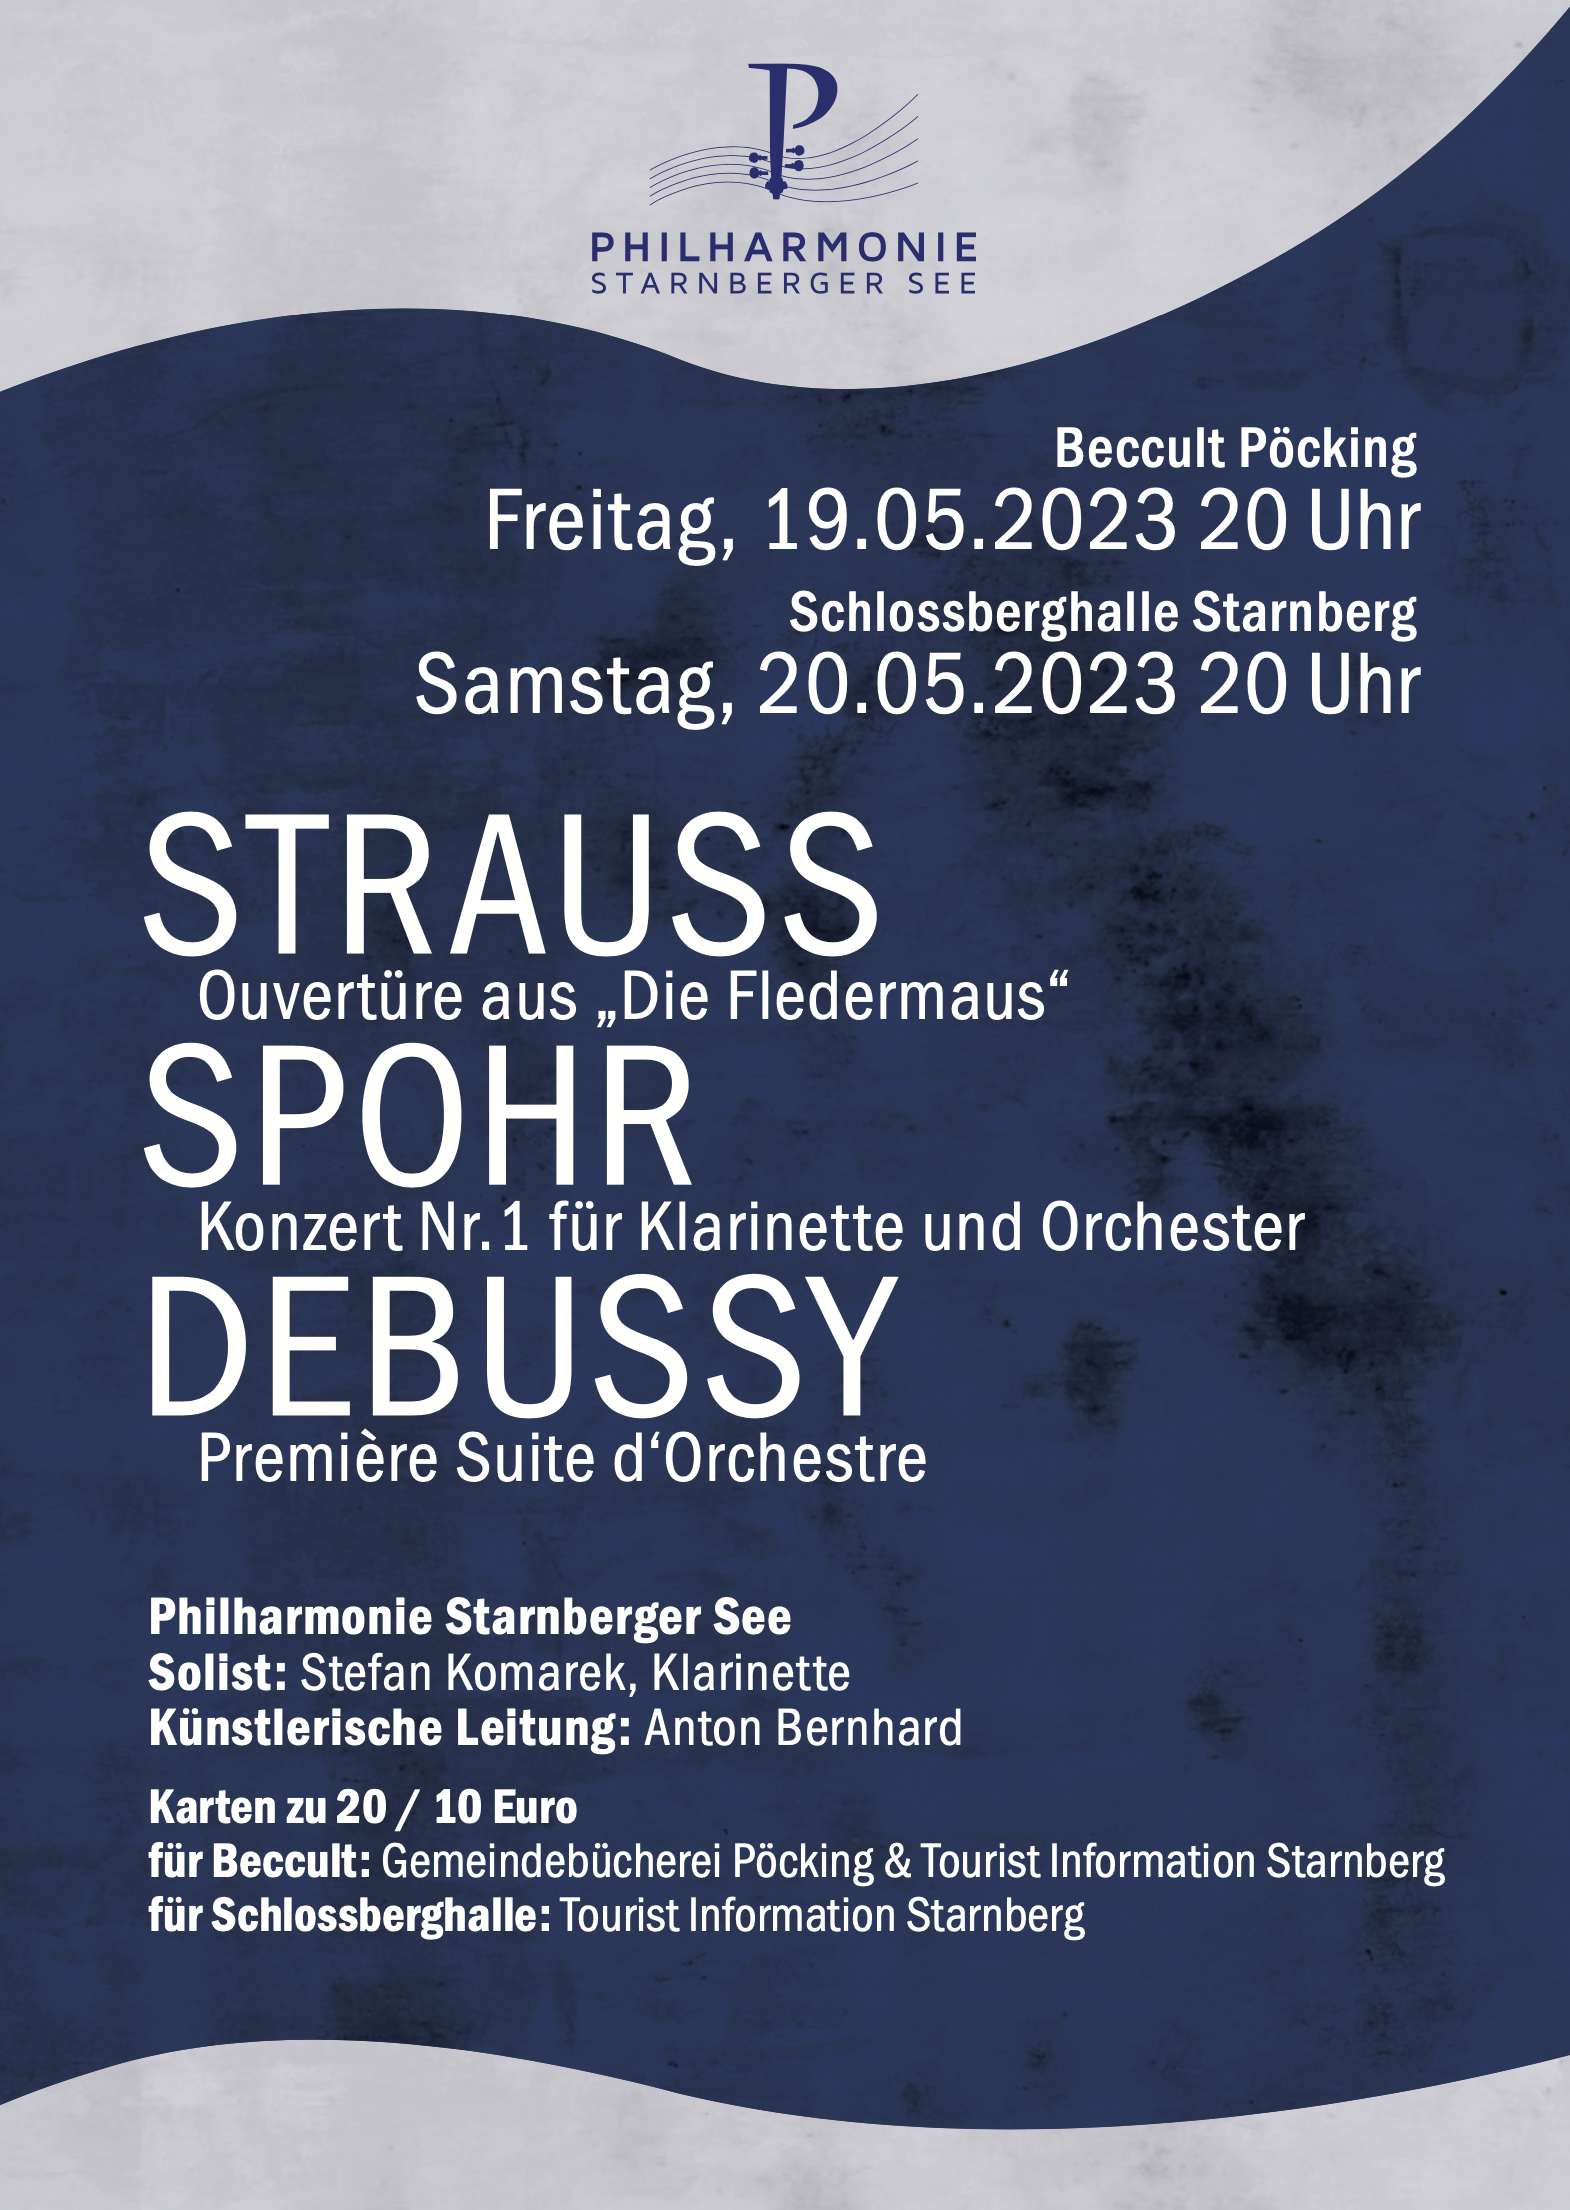 19./20.5. Philharmonie Starnberger See